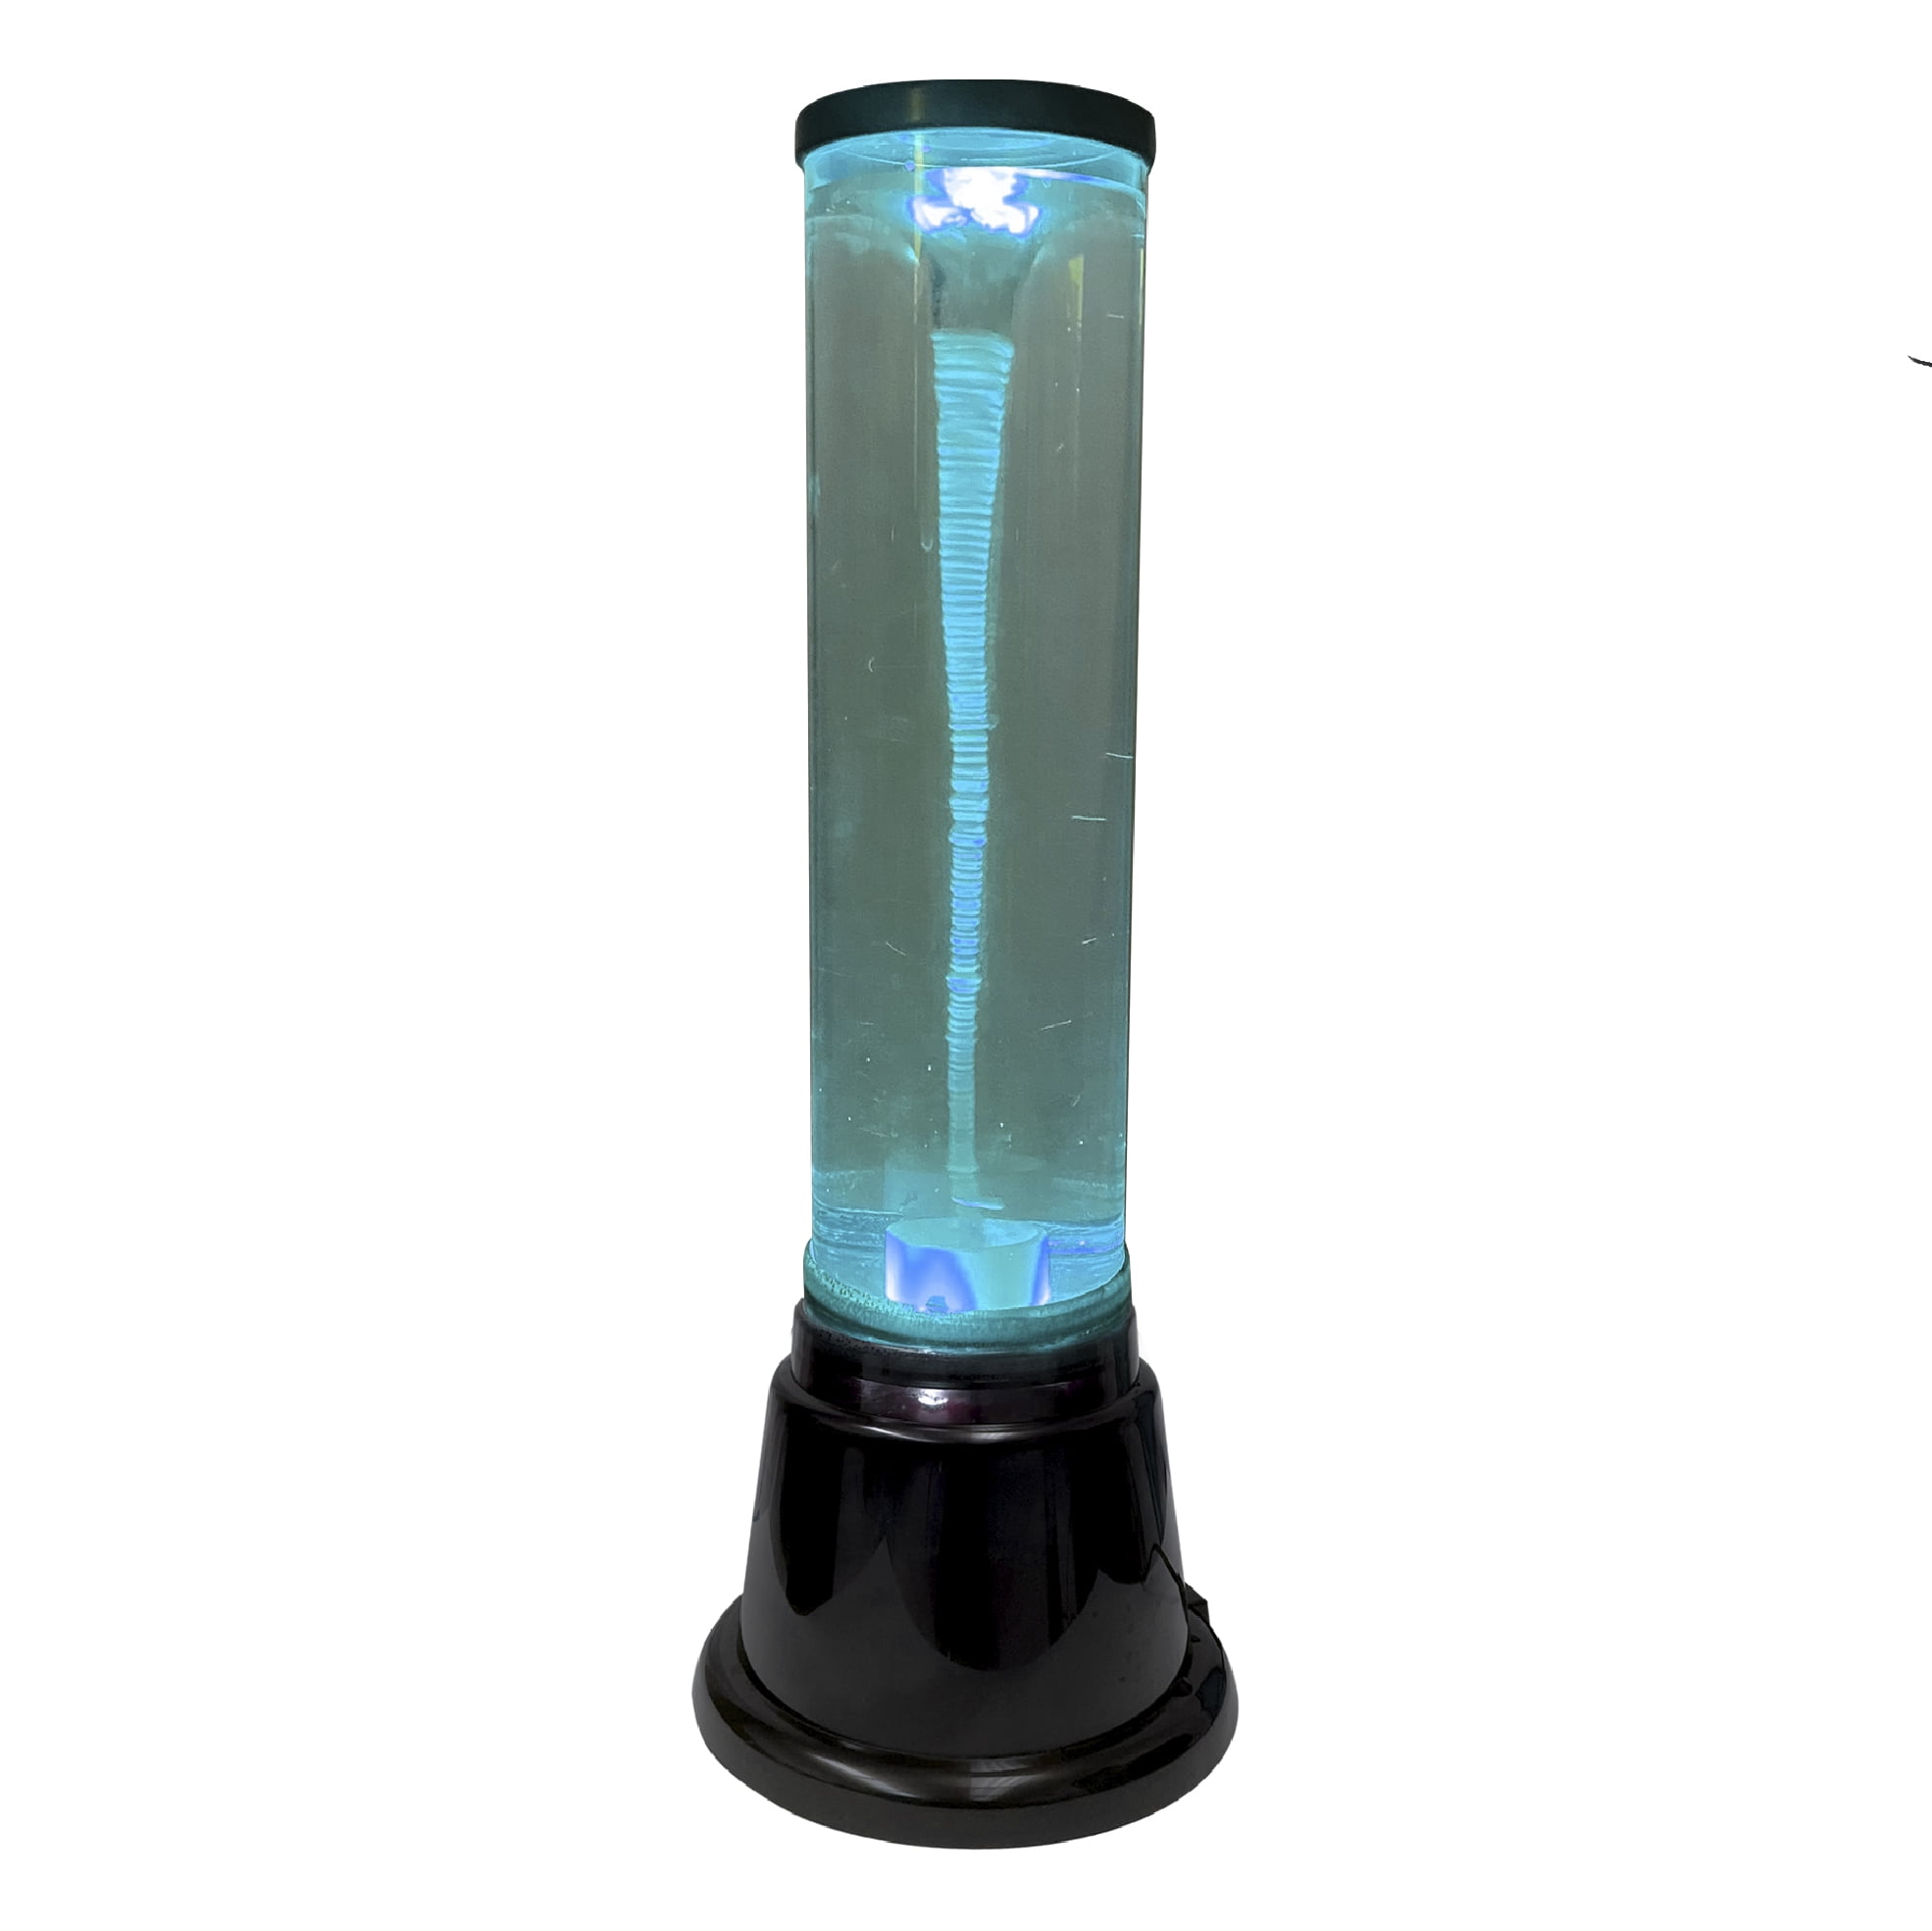 SensoryMoon Pet Tornado Twister Lamp – Mini Water Vortex Maker Machine in  14” Color Changing Tube is